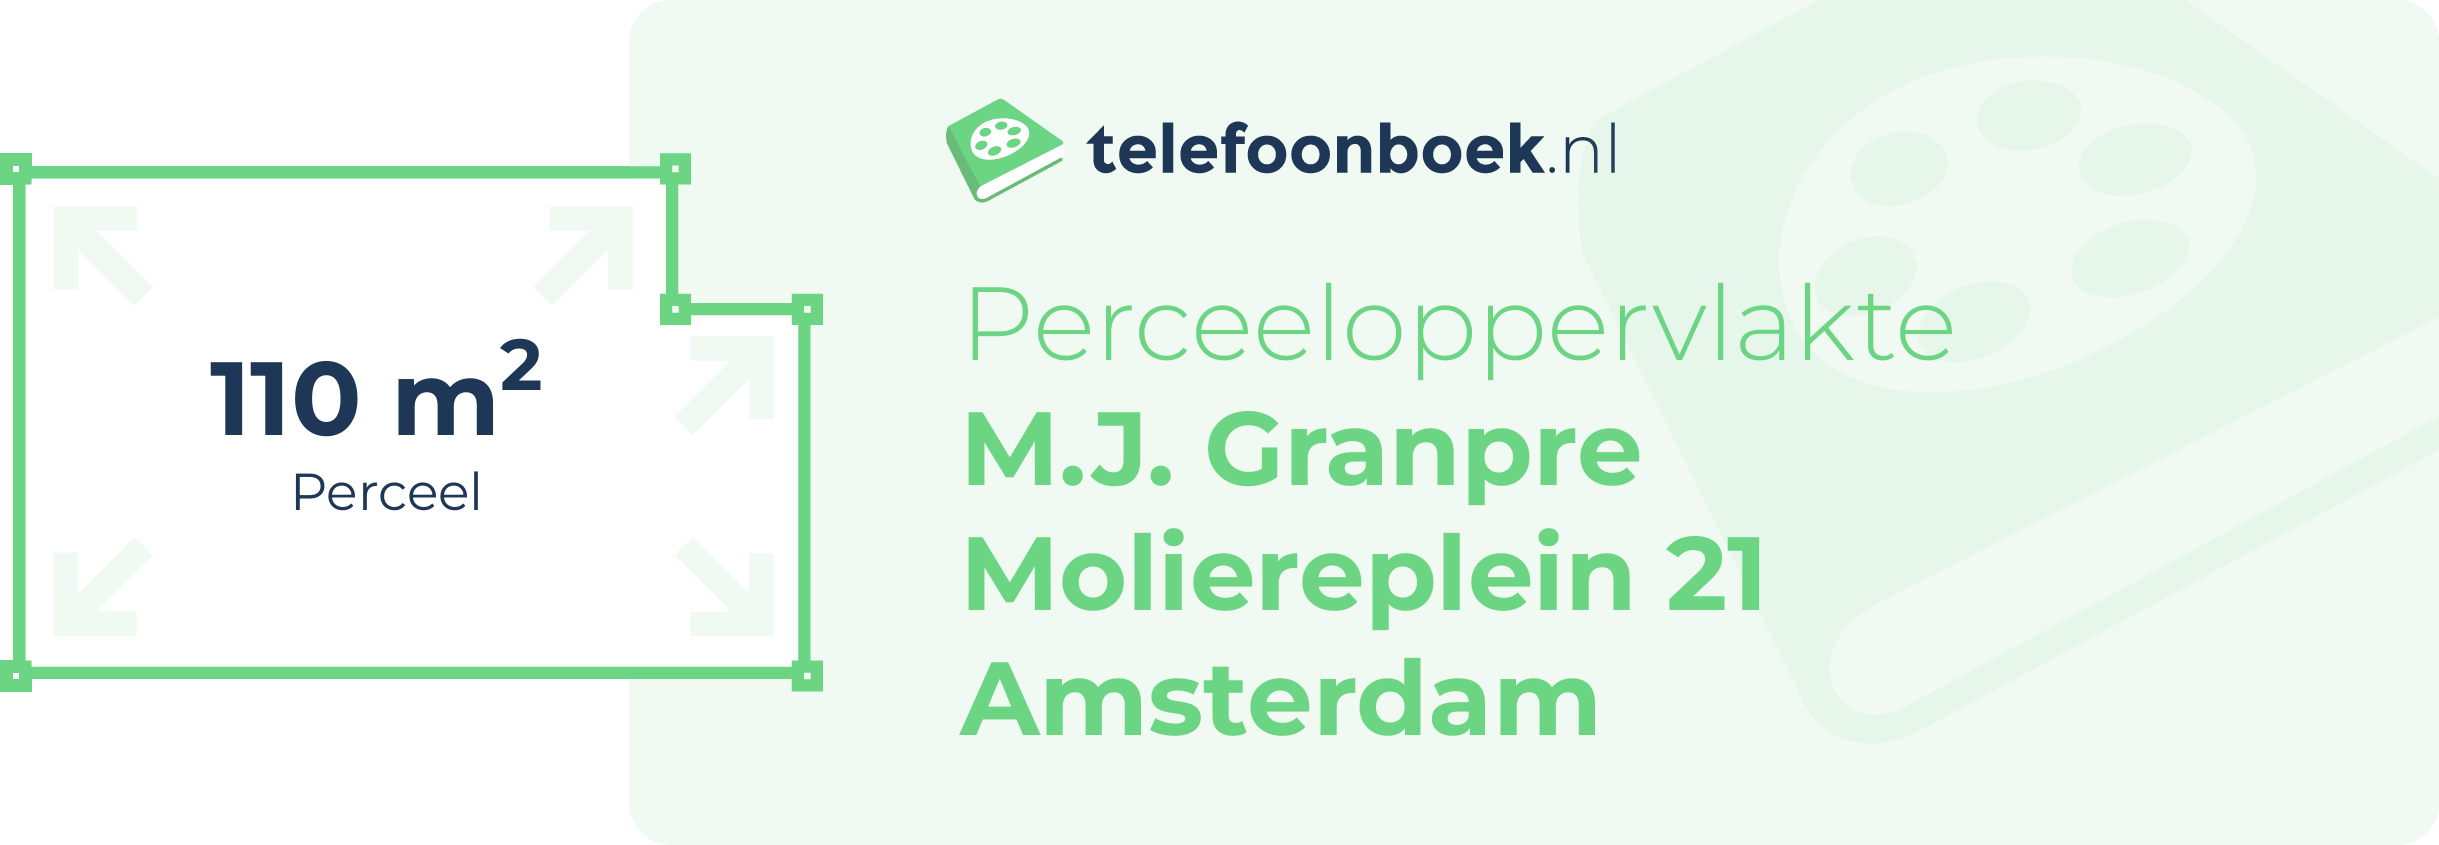 Perceeloppervlakte M.J. Granpre Moliereplein 21 Amsterdam